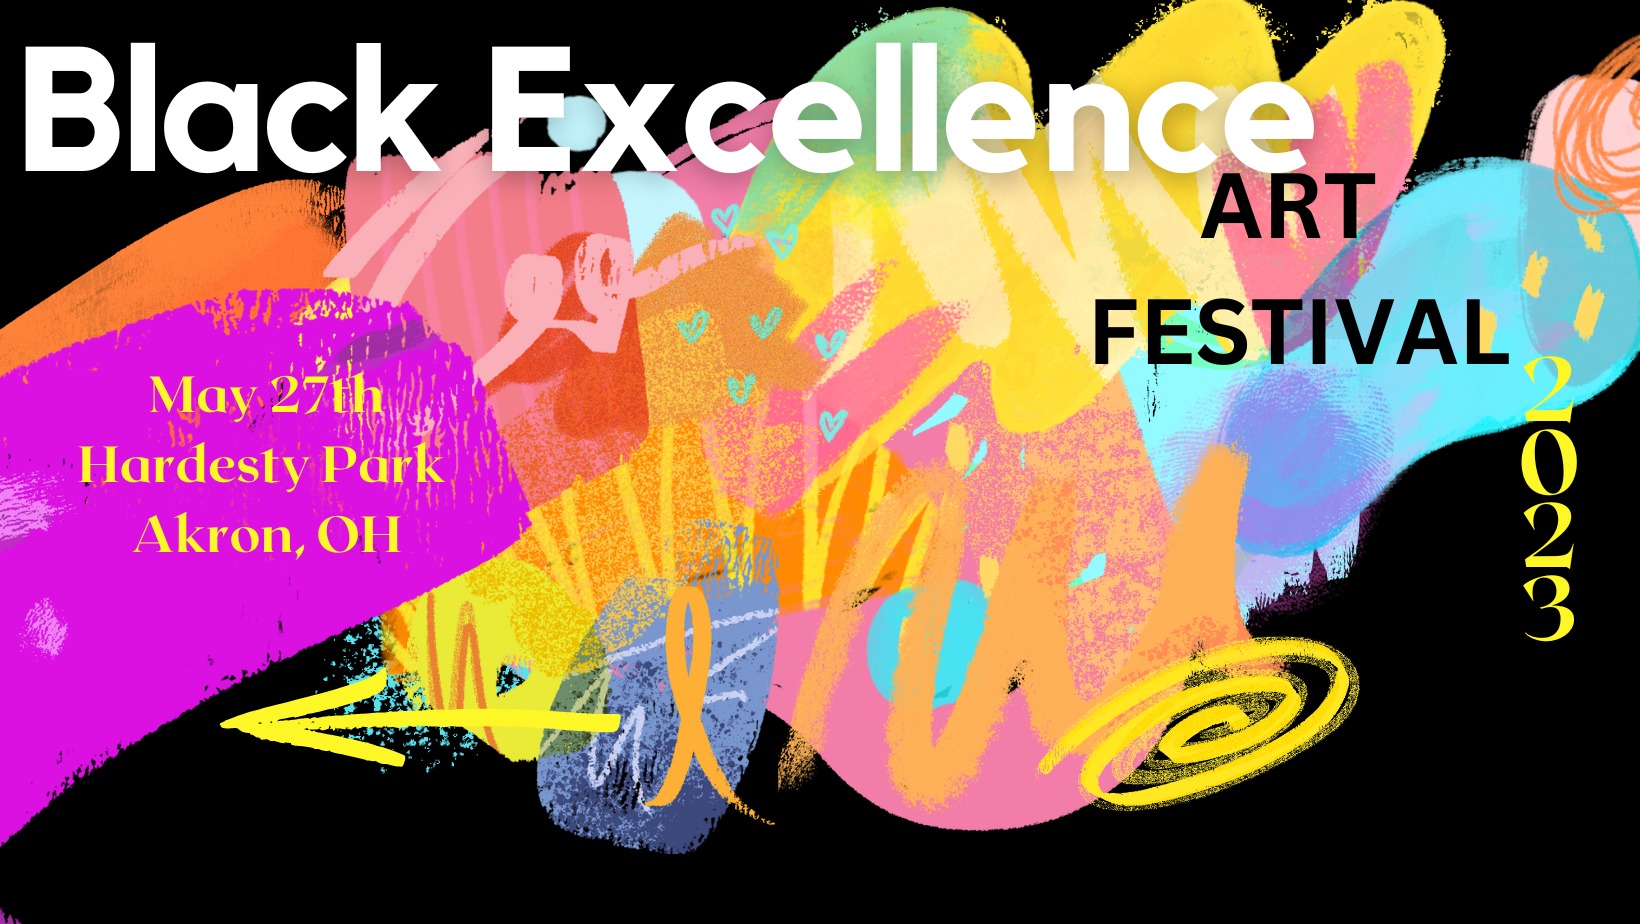 Black Excellence Art Festival cover image